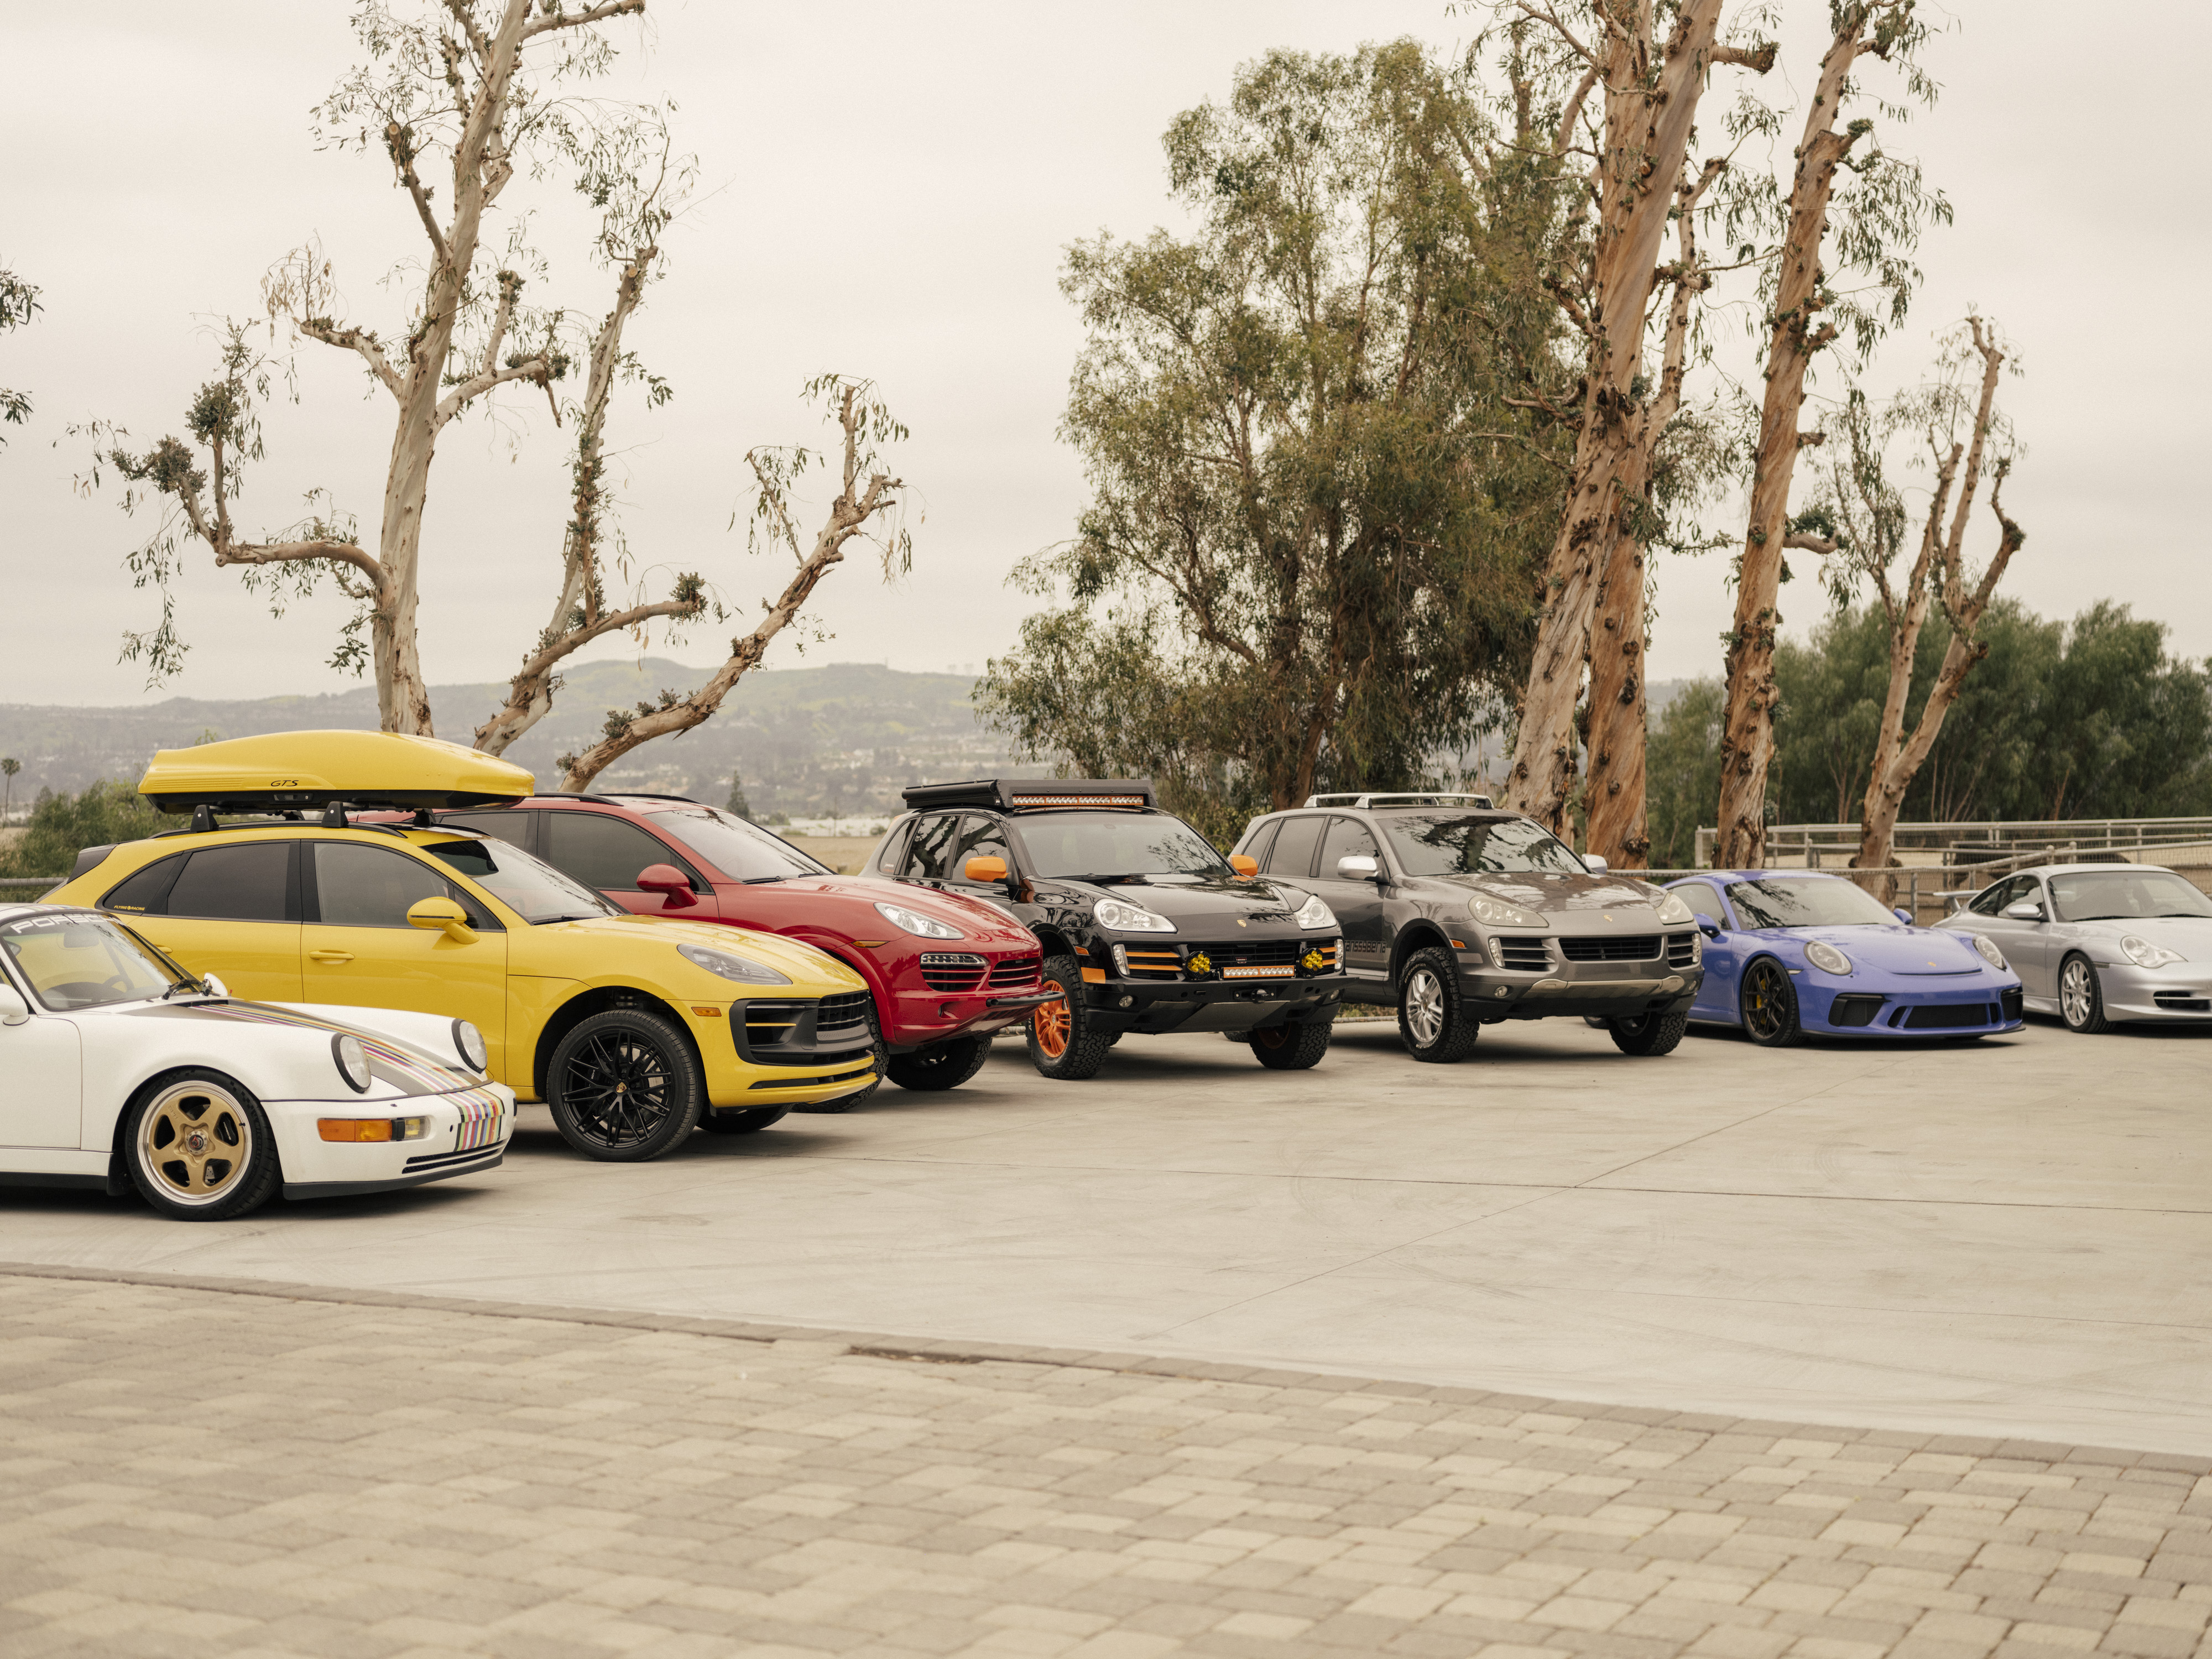 Line-up of Porsche 911 sportscars and Cayenne SUVs outside ranch